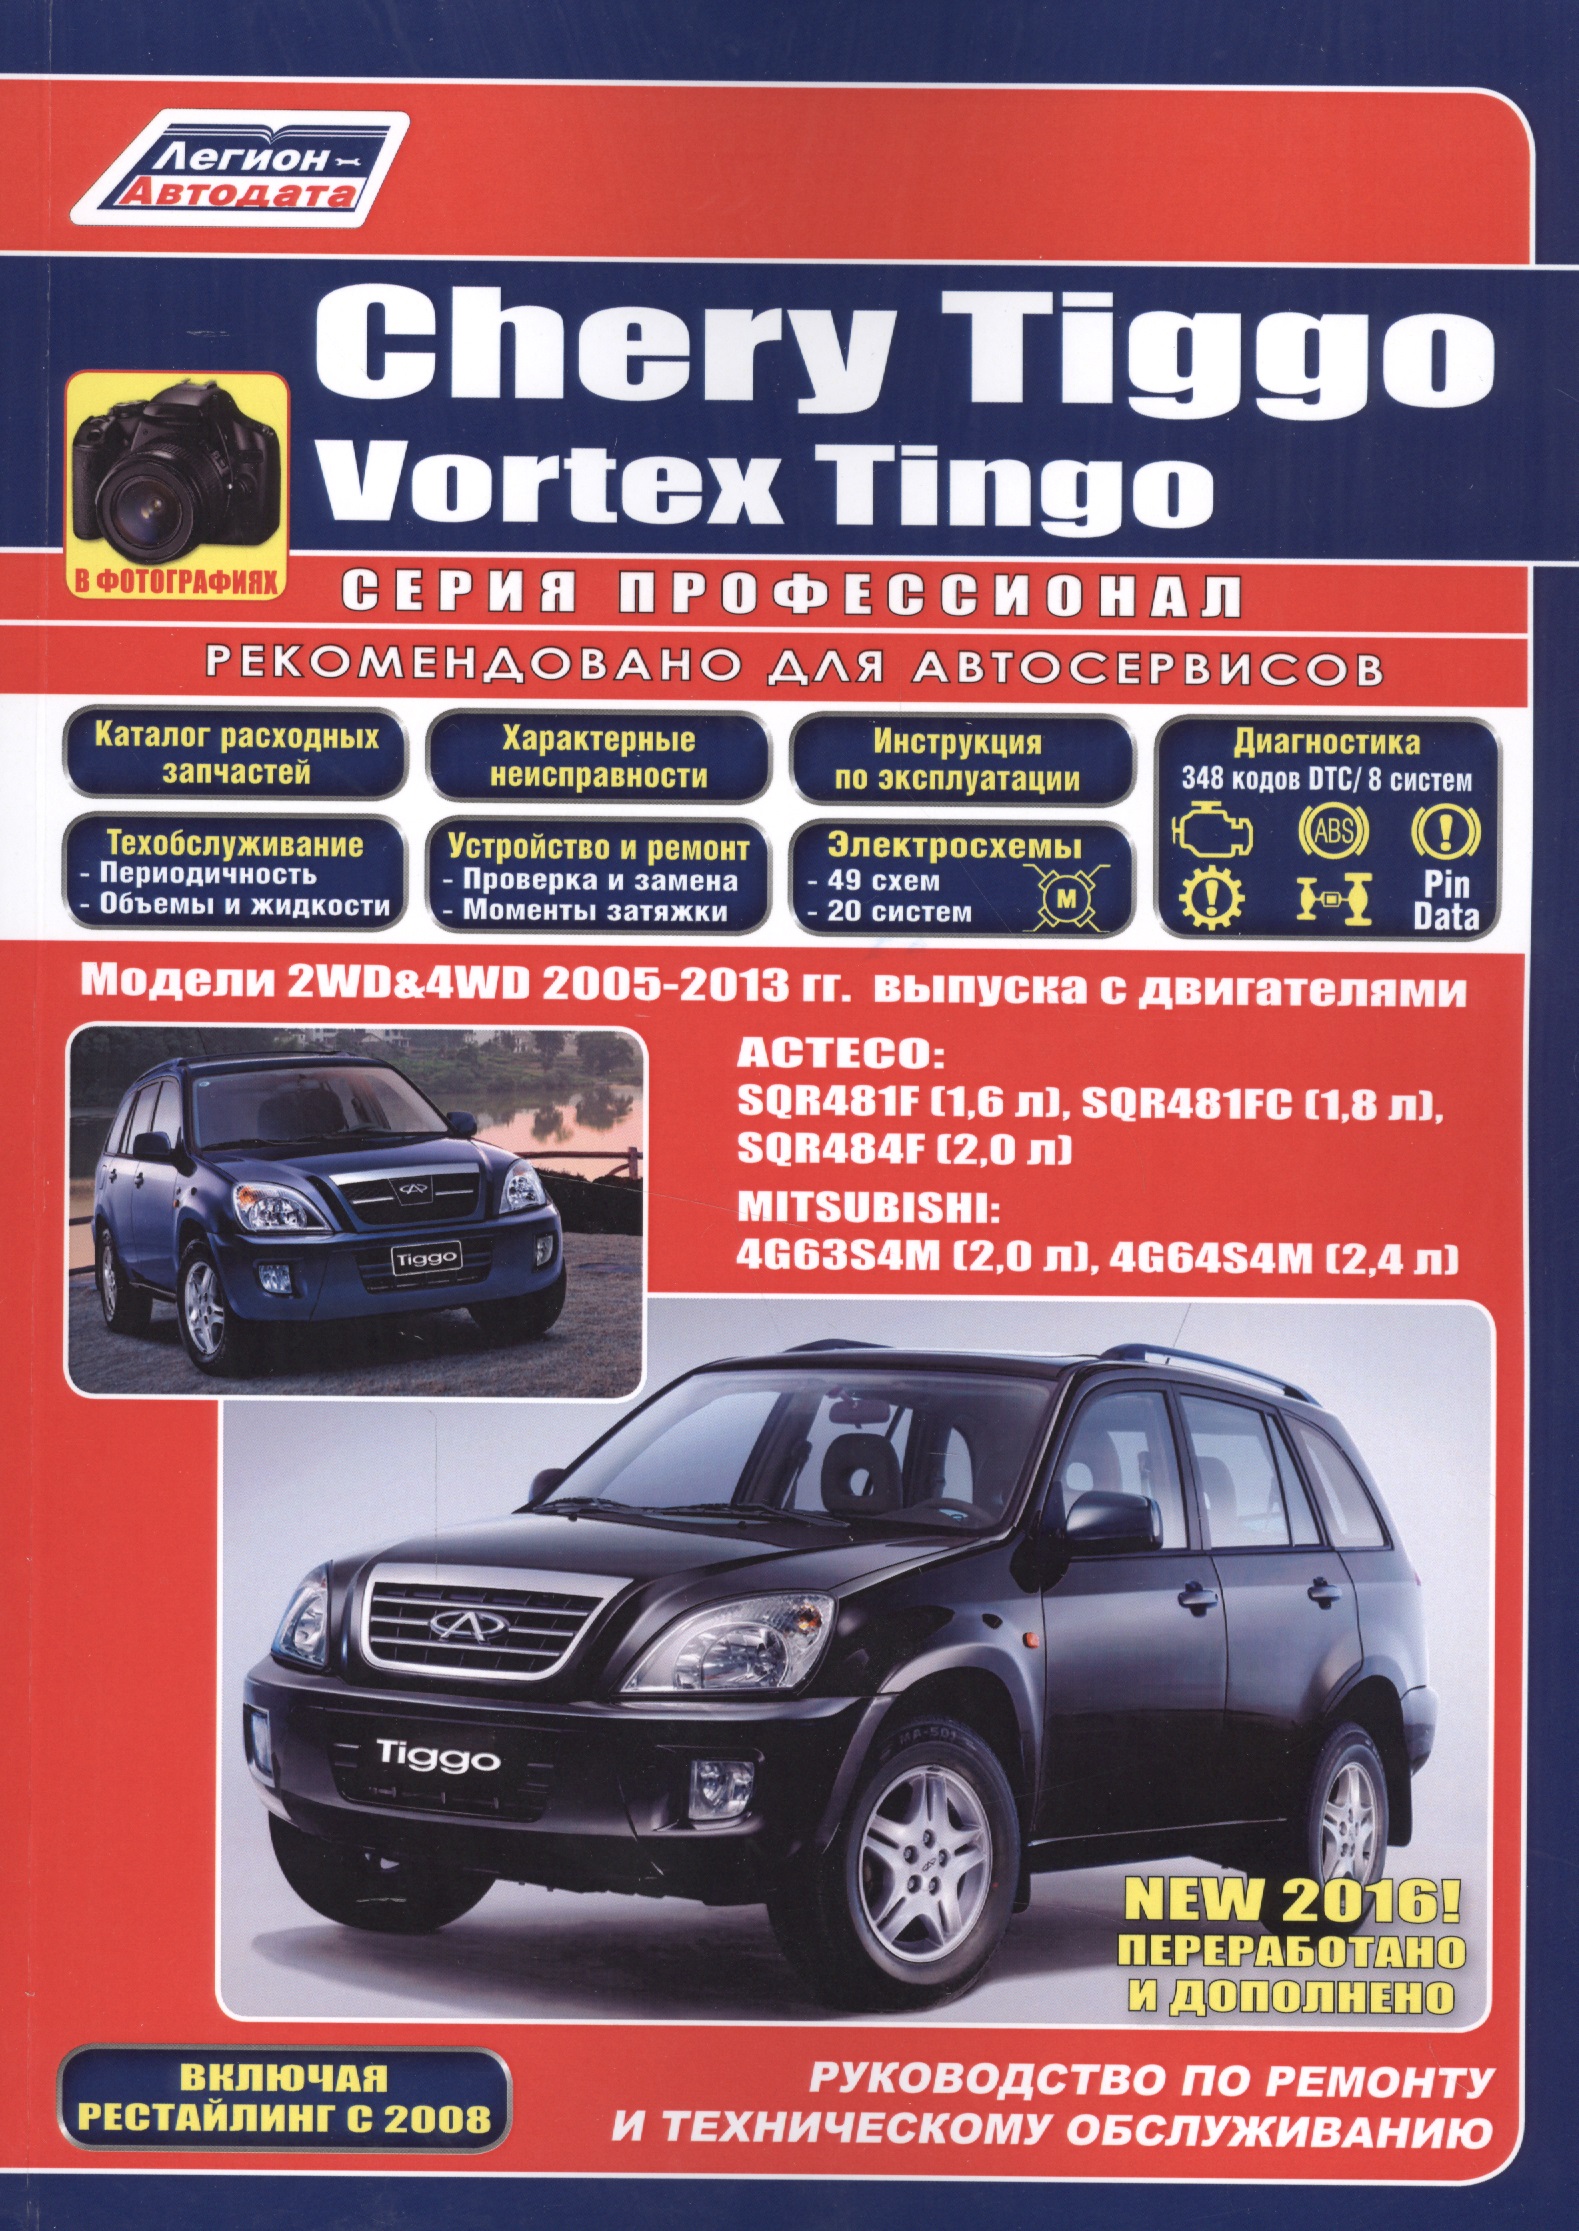 Chery Tiggo. Vortex Tingo  .  2WD&4WD 2005-2013 .    : ACTECO: SQR481F (1, 6 .), SQR481FC (1, 8 .), SQR484F (2, 0 .)  MITSUBISHI 4G63S4M (2, 0 .), 4G64S4M (2, 4 .).    2008 